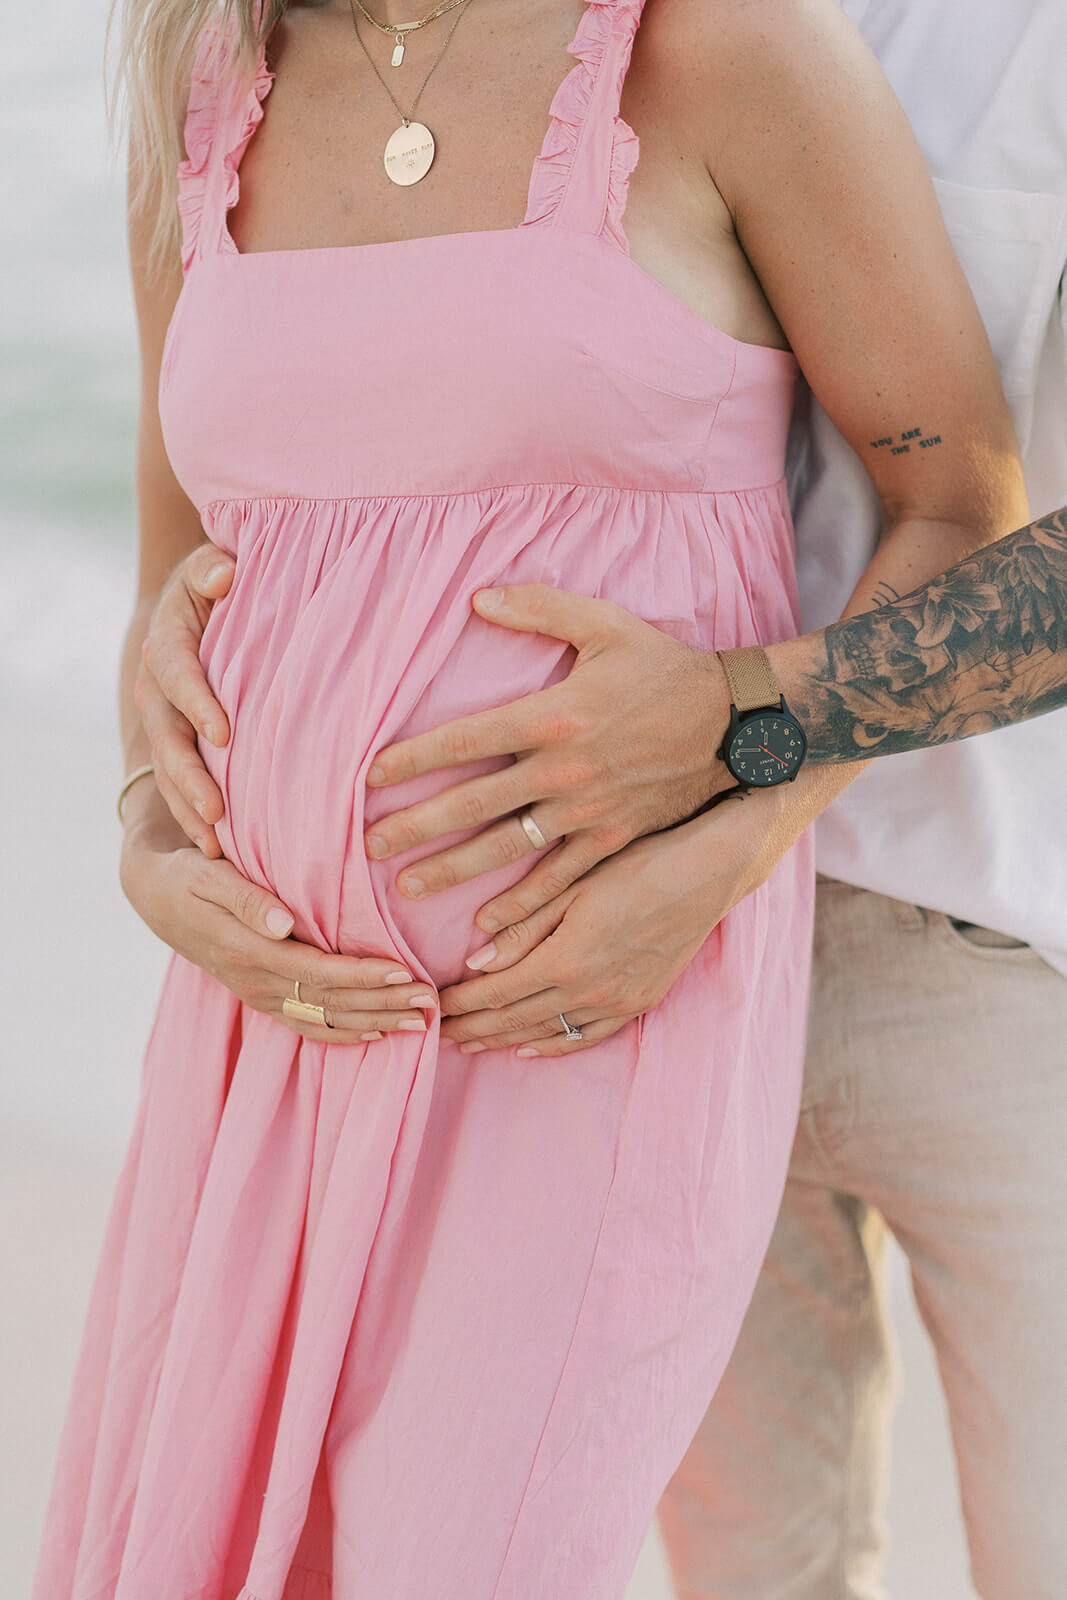 Naples Maternity Photographer – Florida Beach Maternity Photographer-55